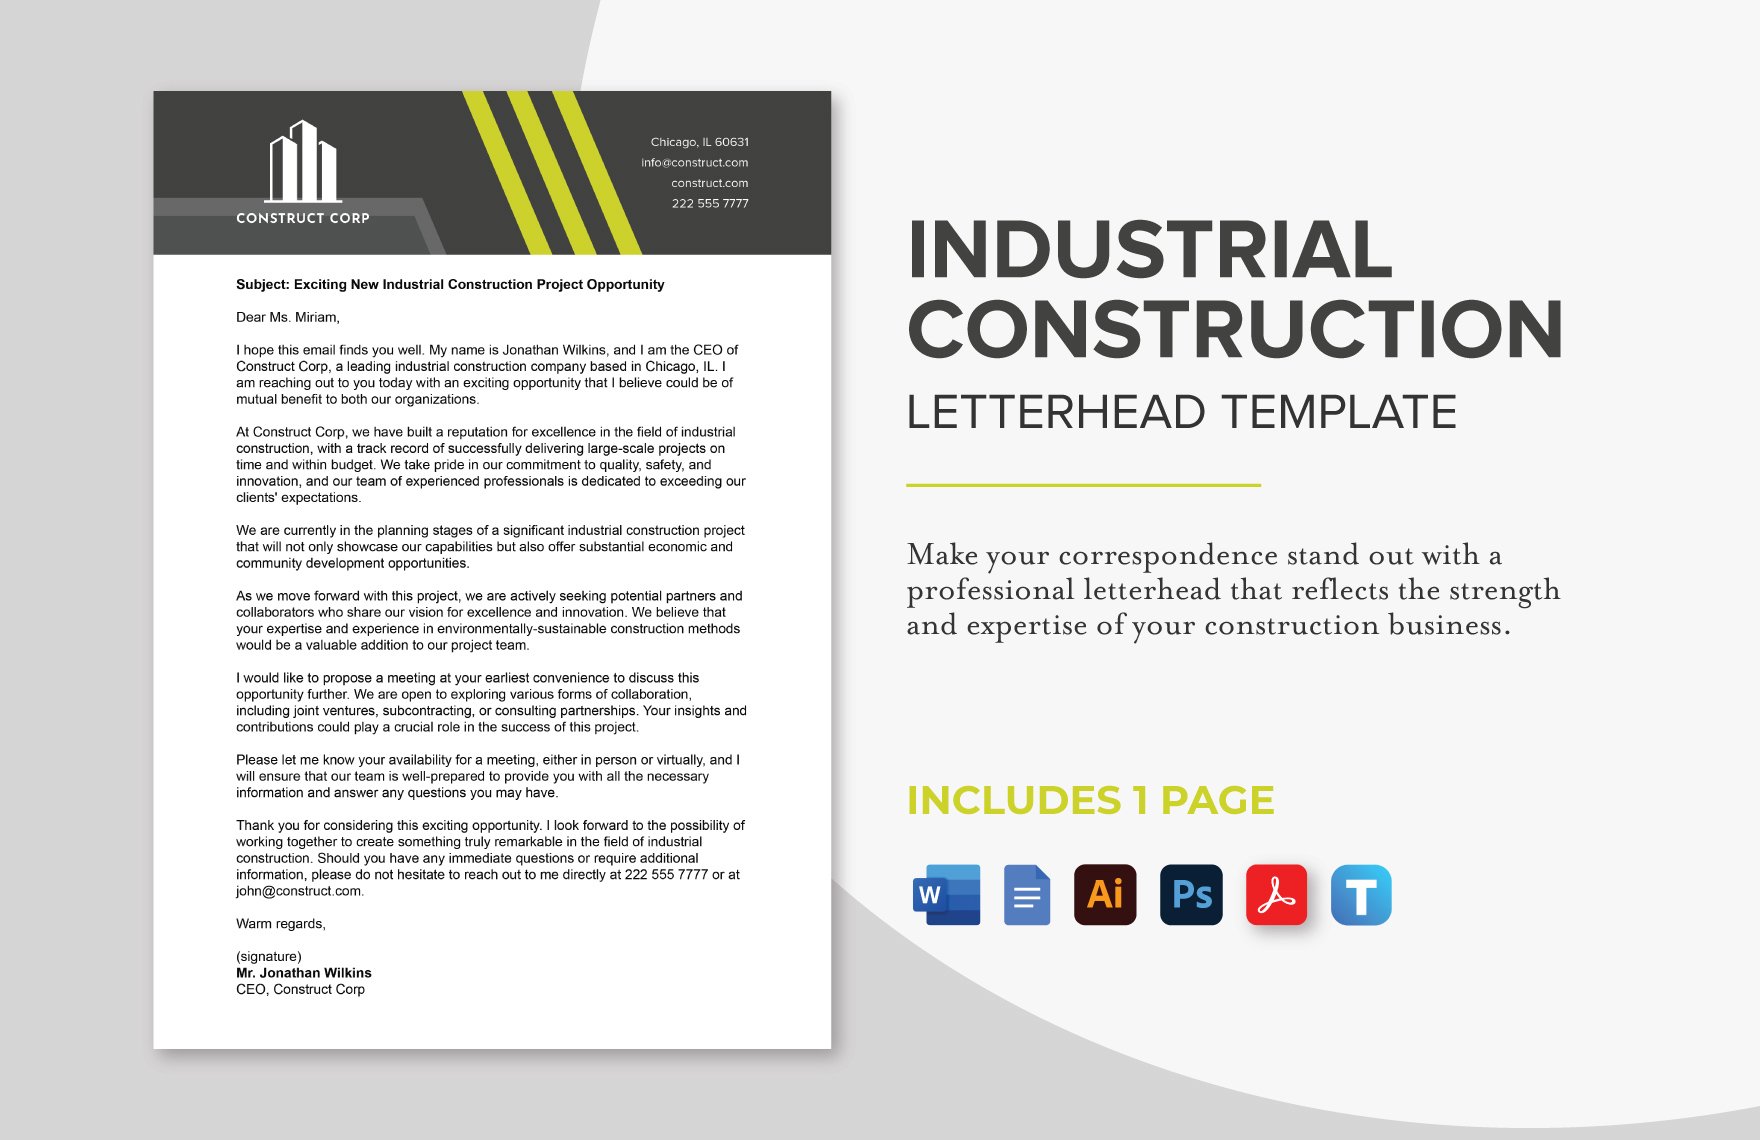 Industrial Construction Letterhead Template